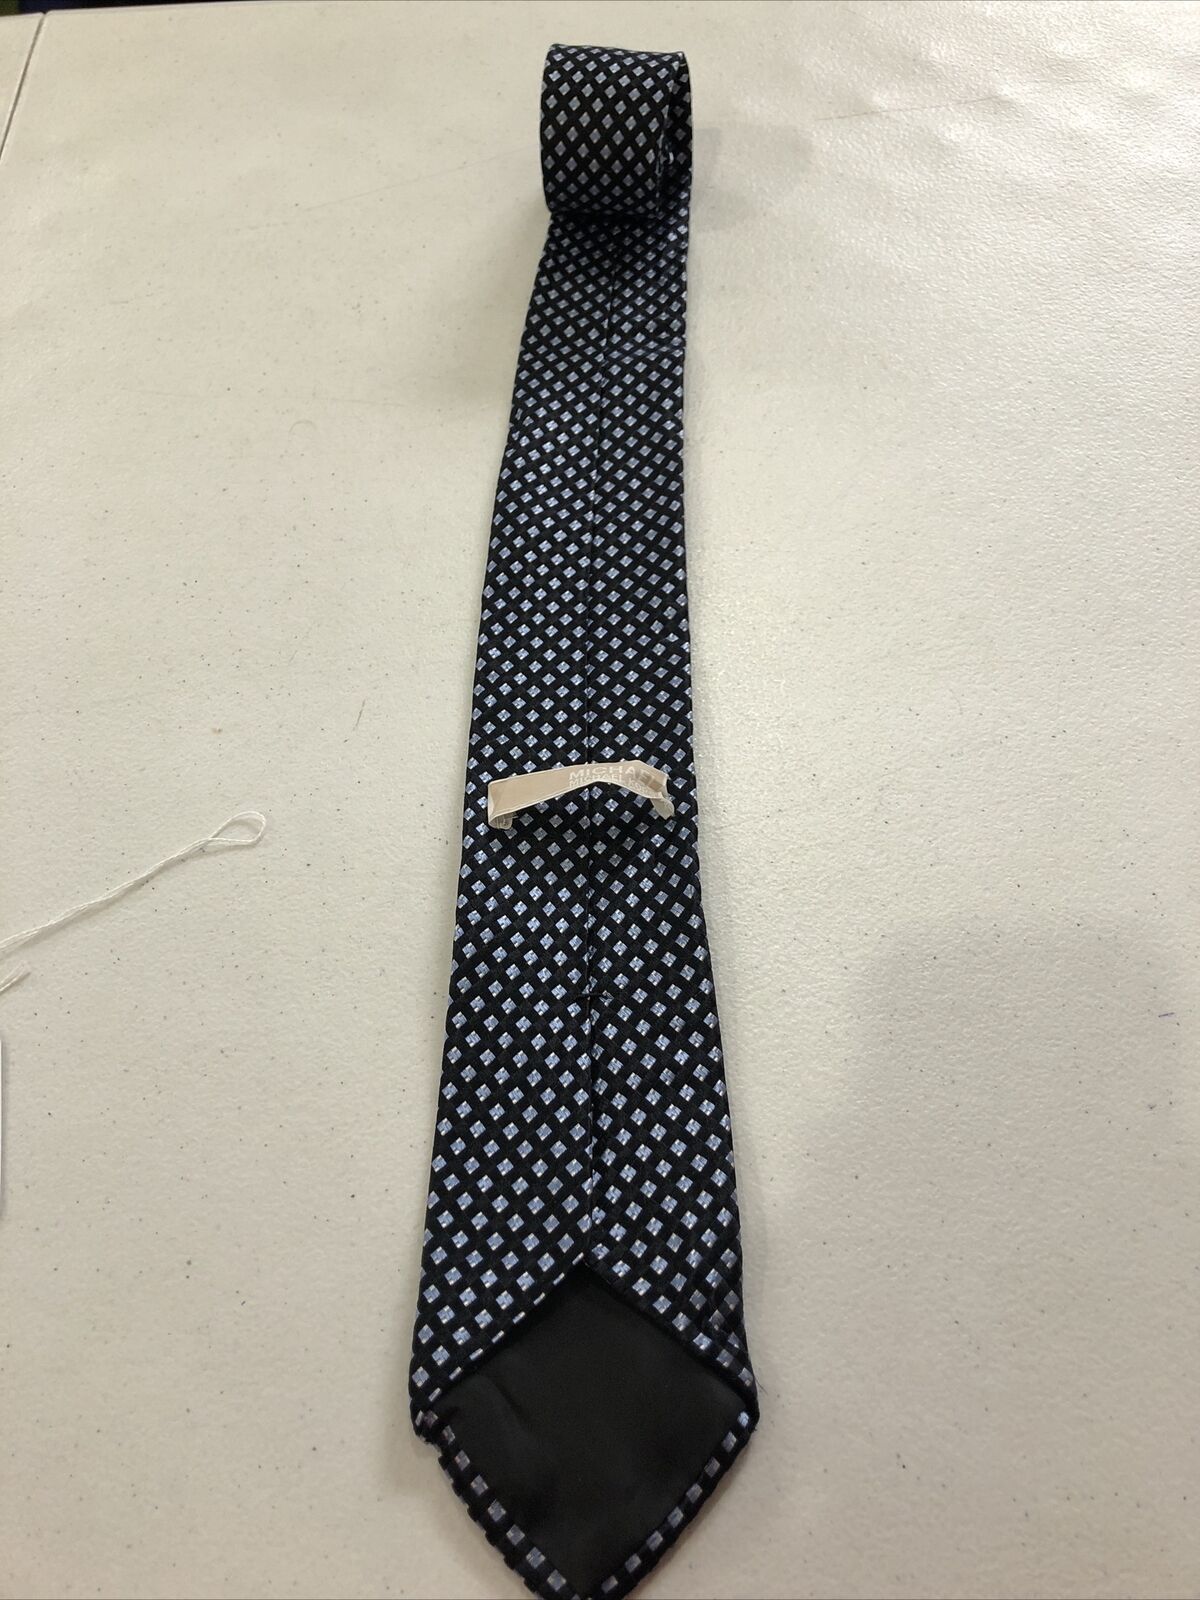 Michael Kors Men's Blue geometric silk Tie $98 - image 4